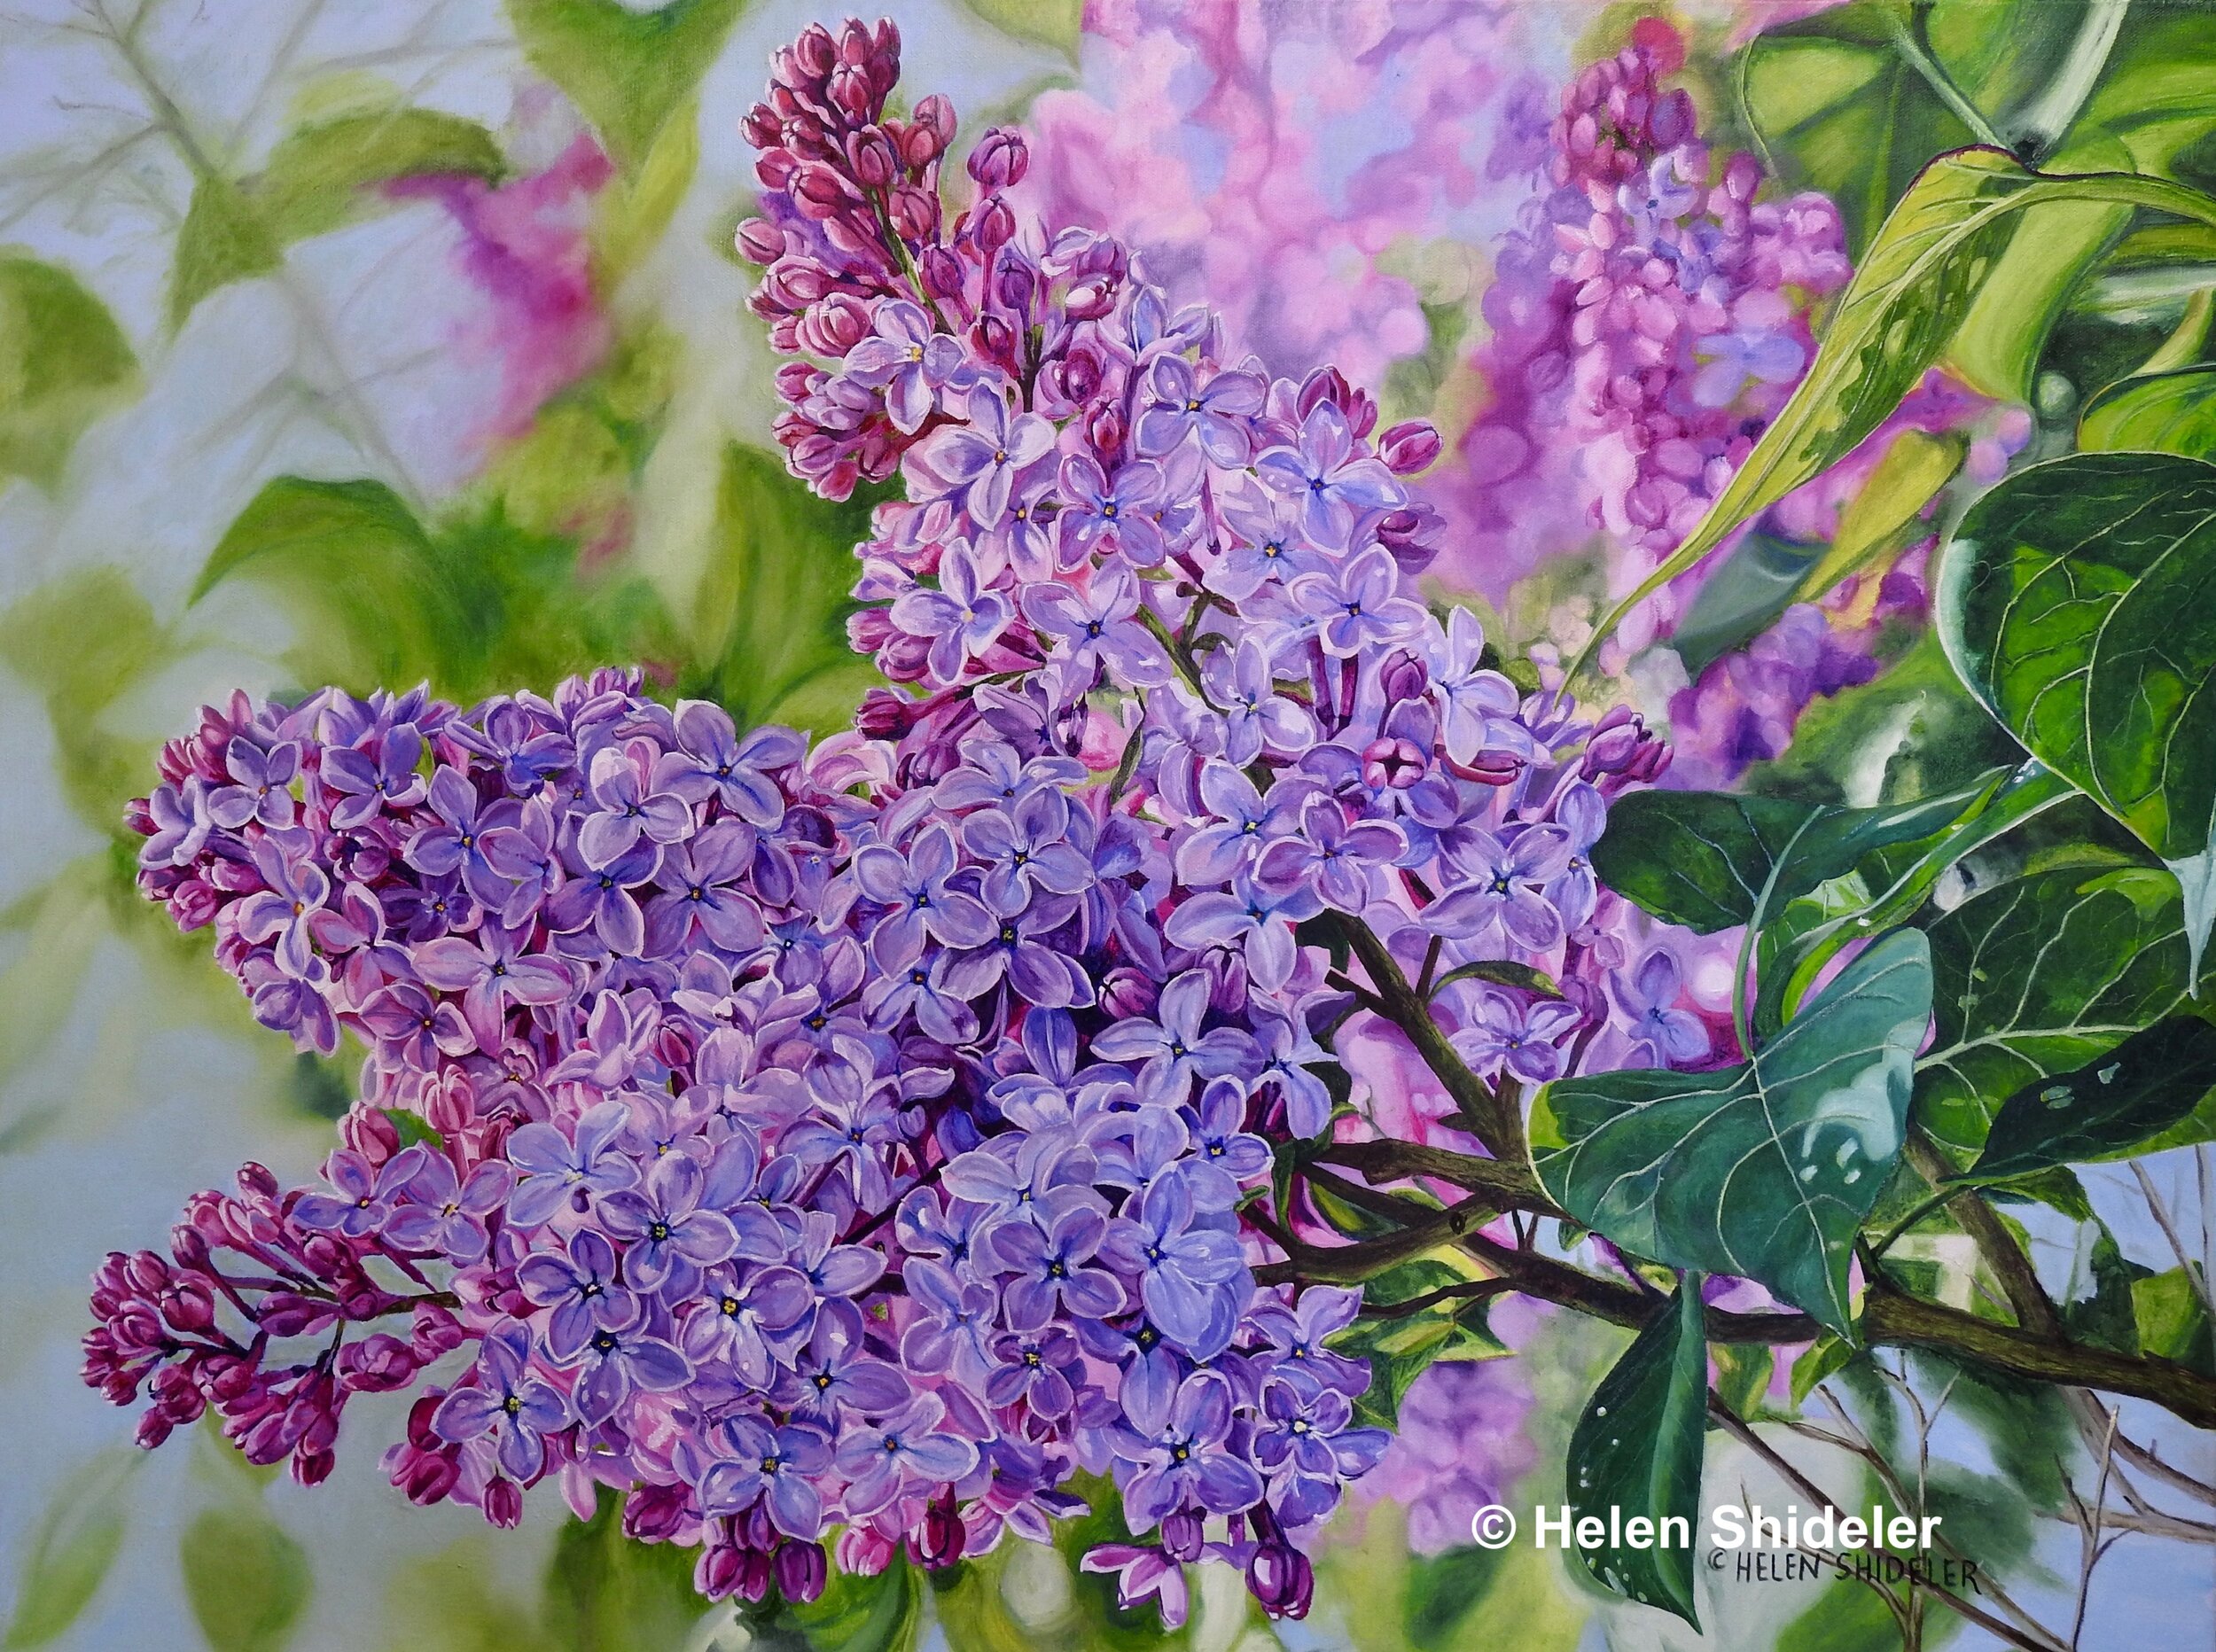 Lilac: Portrait of a Flowering Shrub